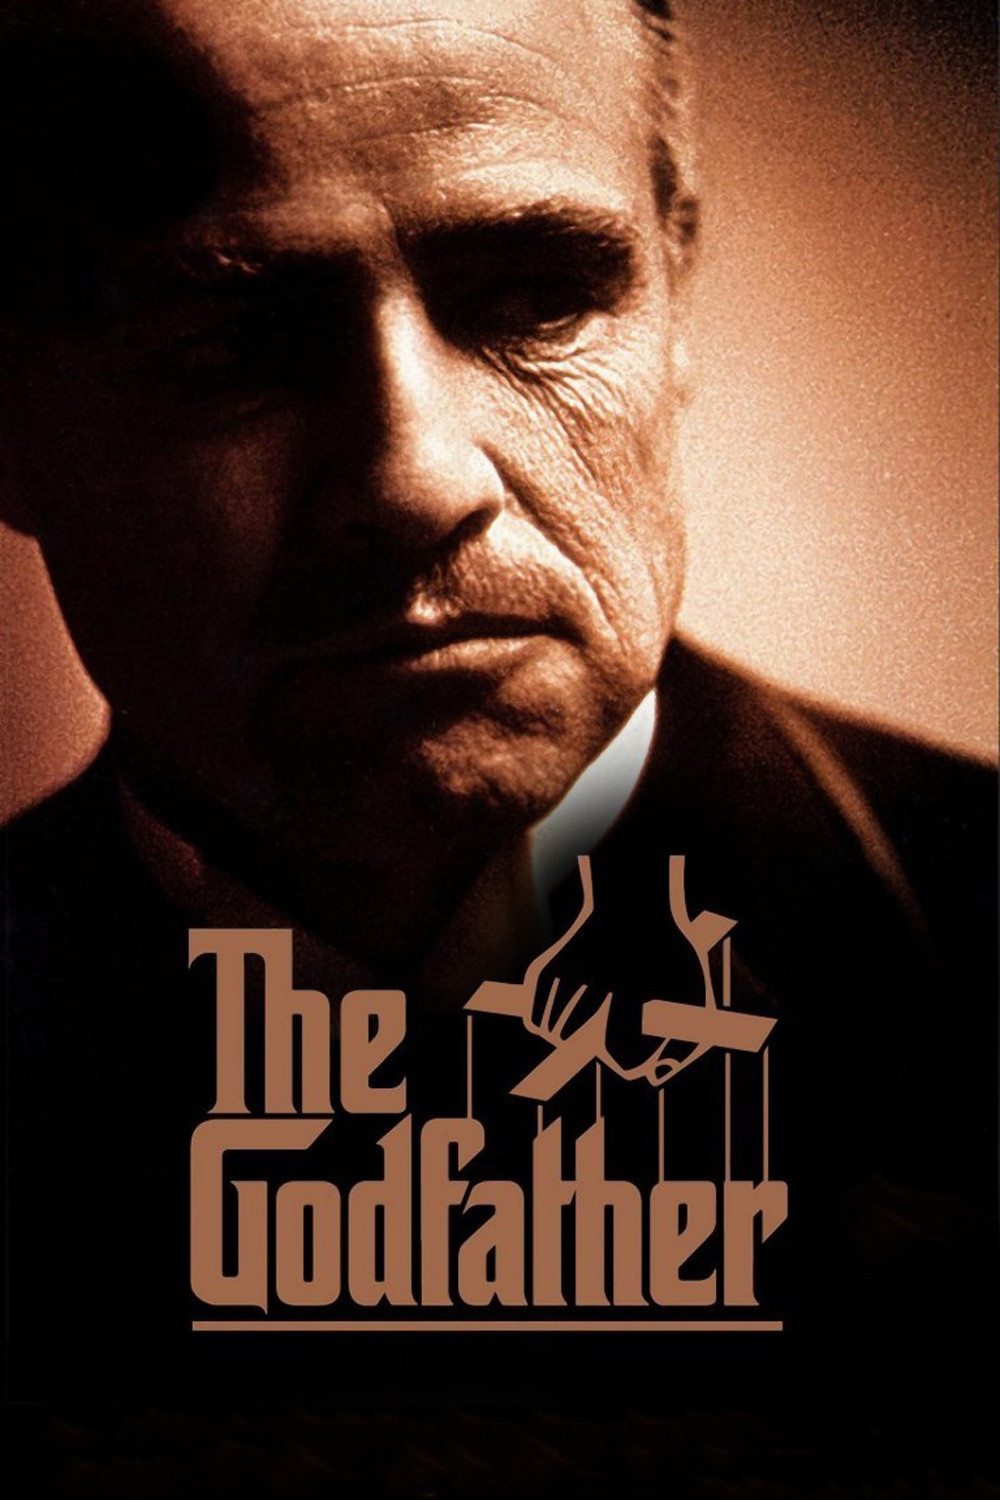 Godfather goodfellas comparison essay